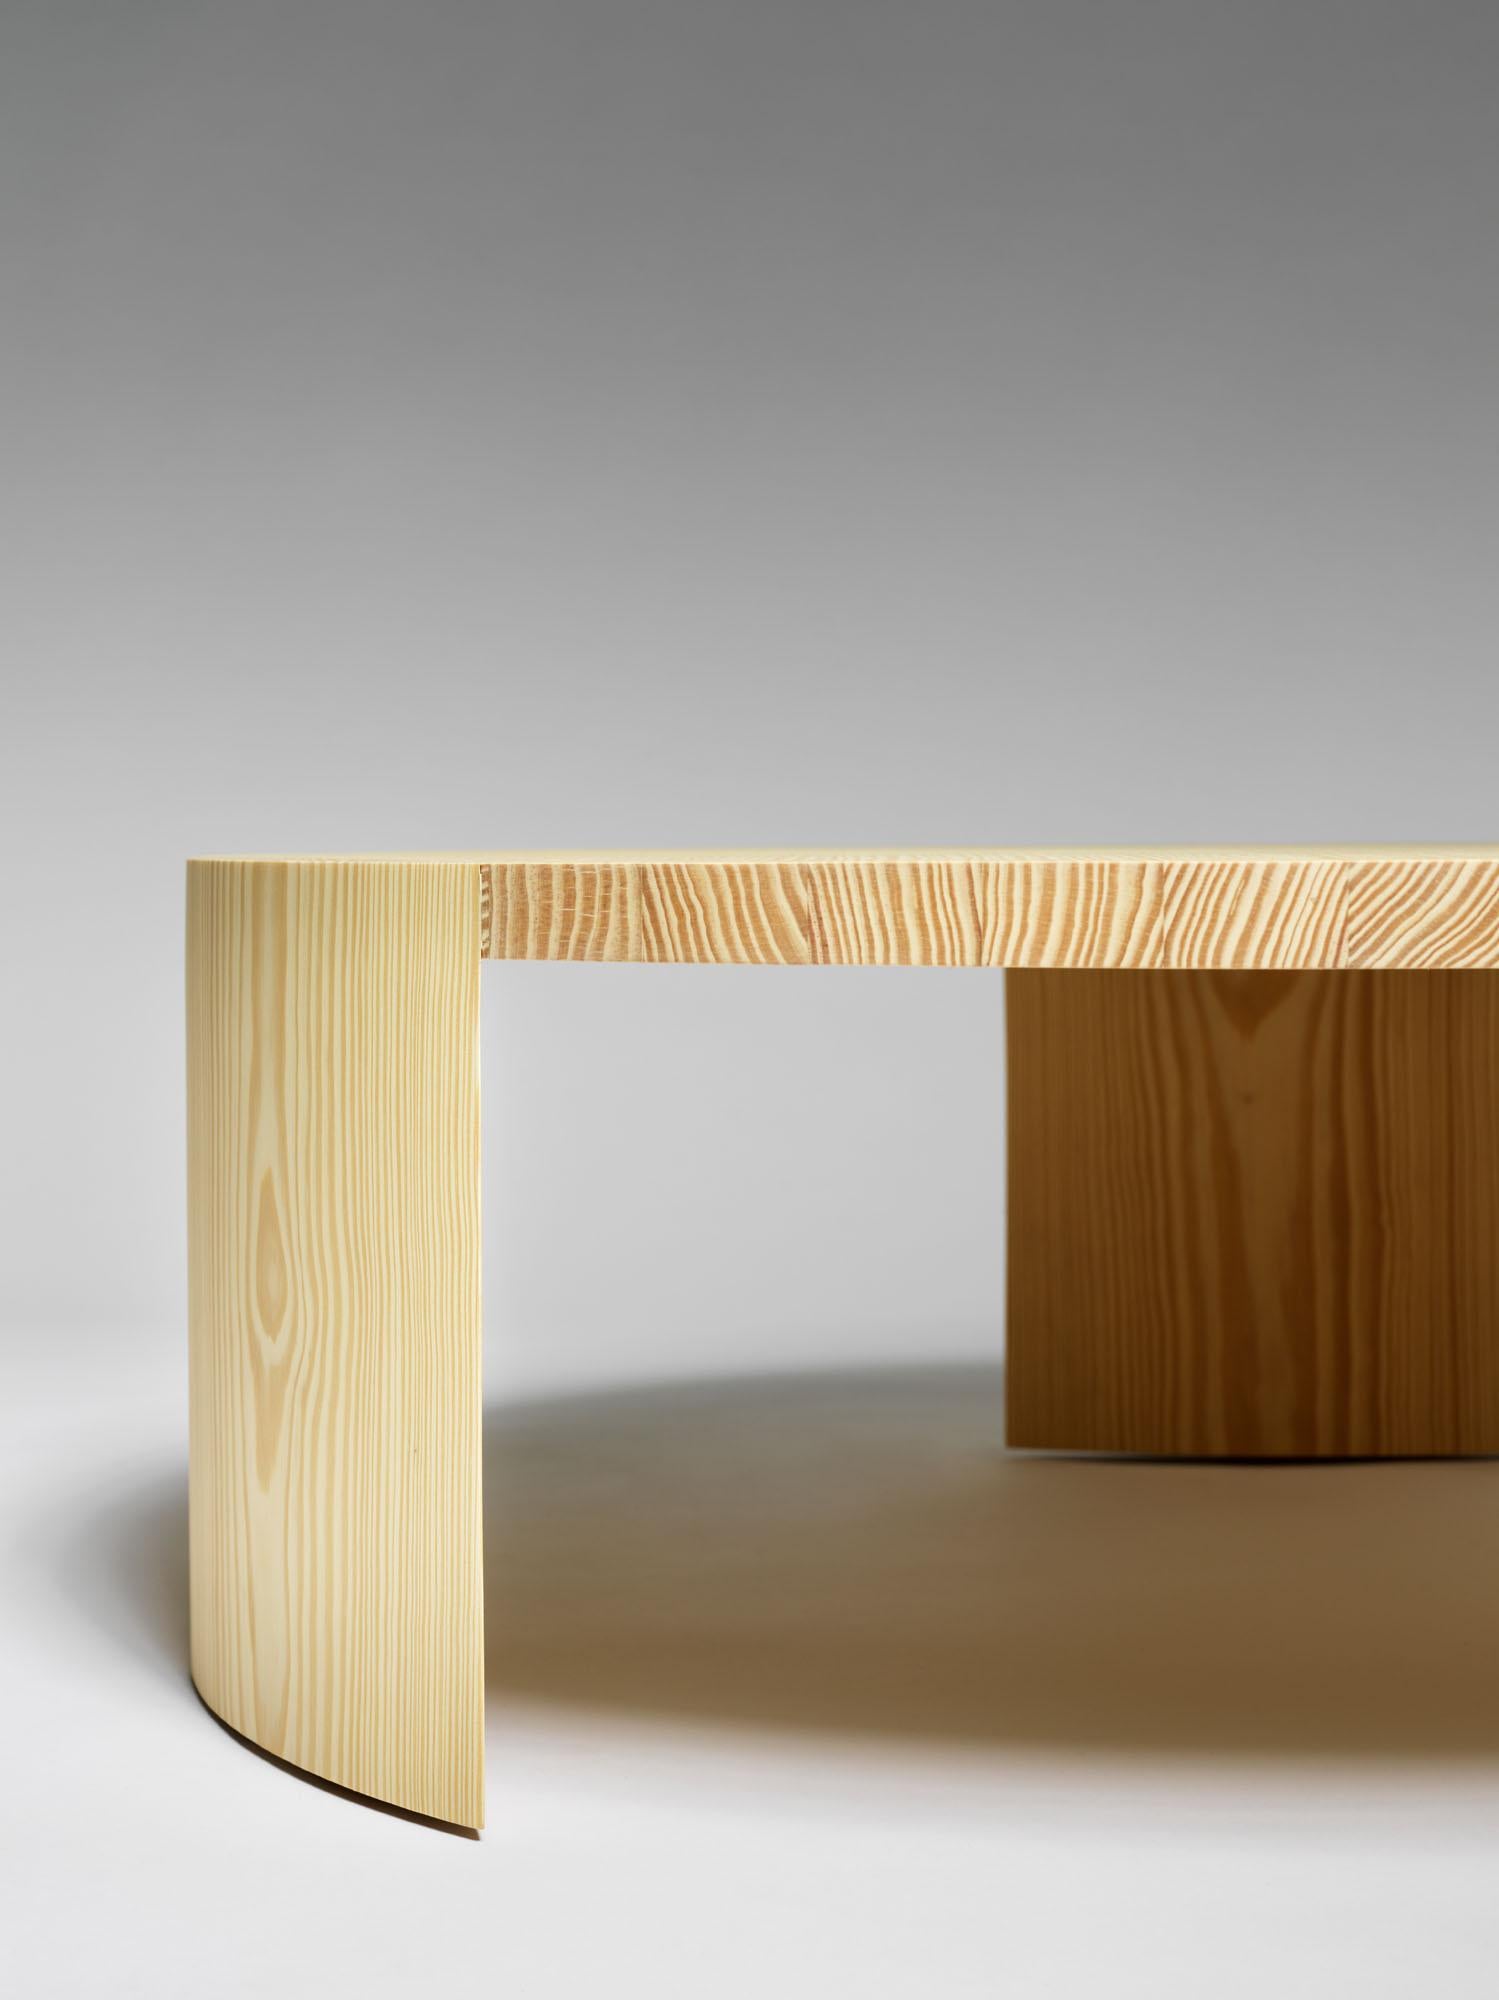 Pine Nort Coffee Table by Tim Vranken